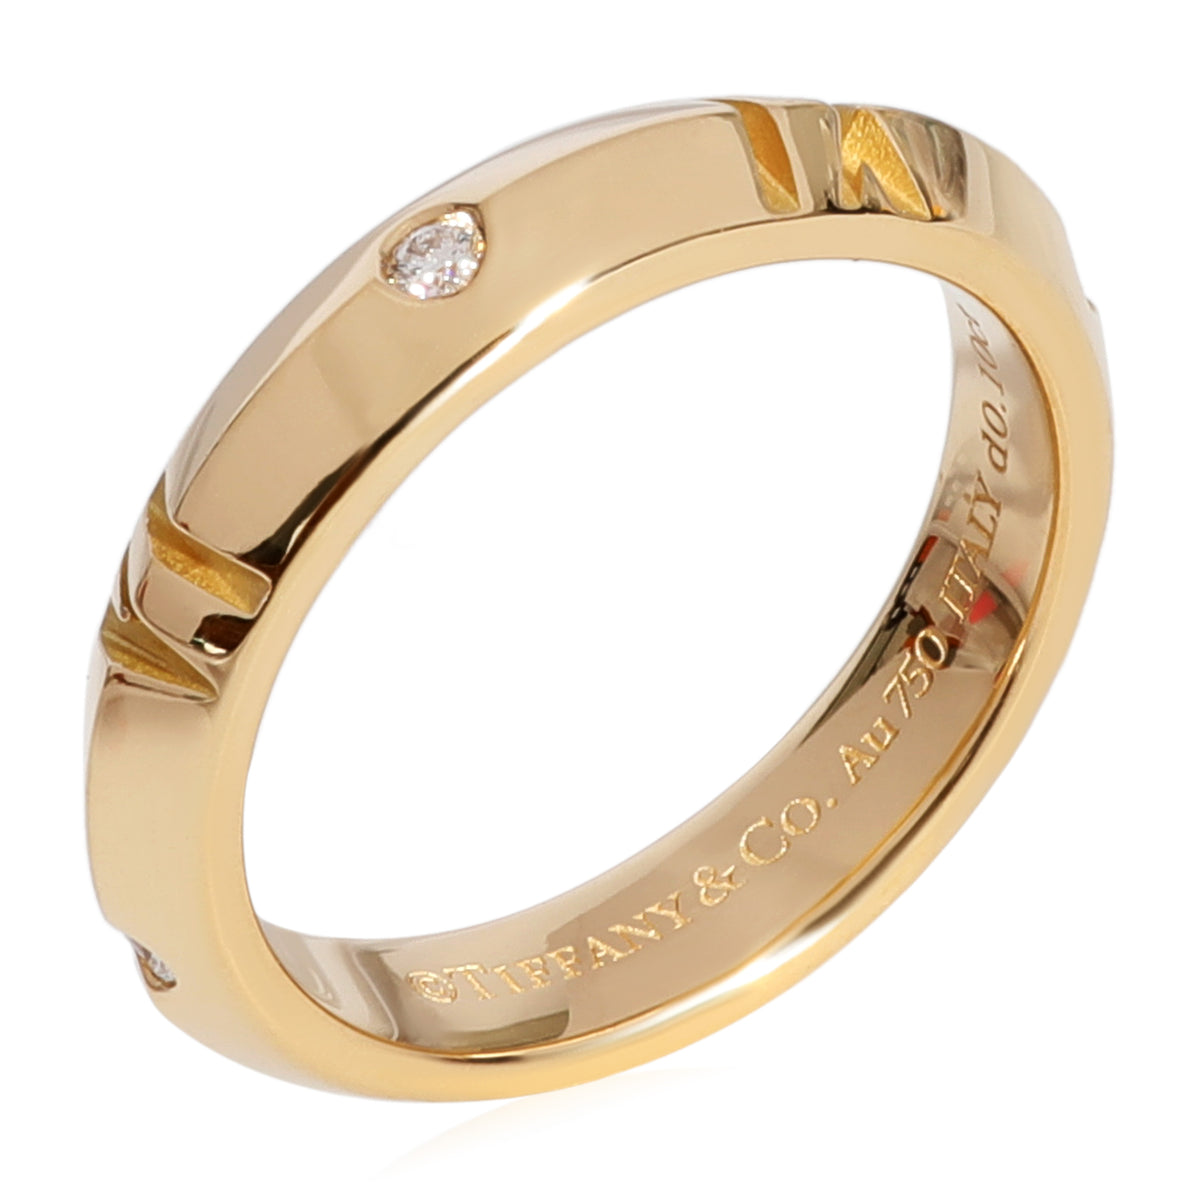 Tiffany & Co. Atlas X Closed Diamond Narrow Ring in 18k Yellow Gold 0.10 CTW